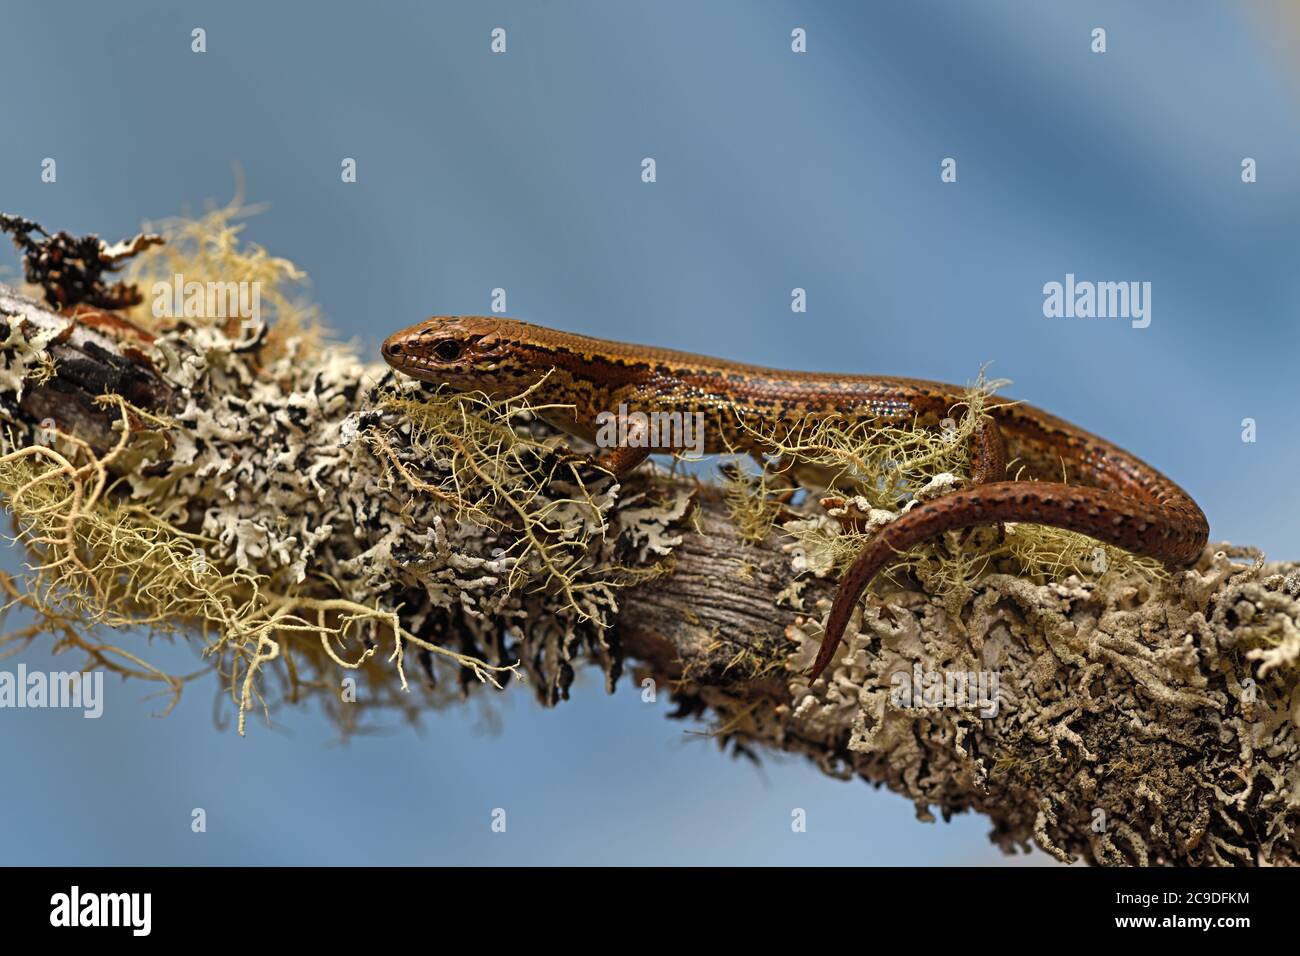 The common skink (Oligosoma polychroma) a species of skink native to New Zealand. Stock Photo